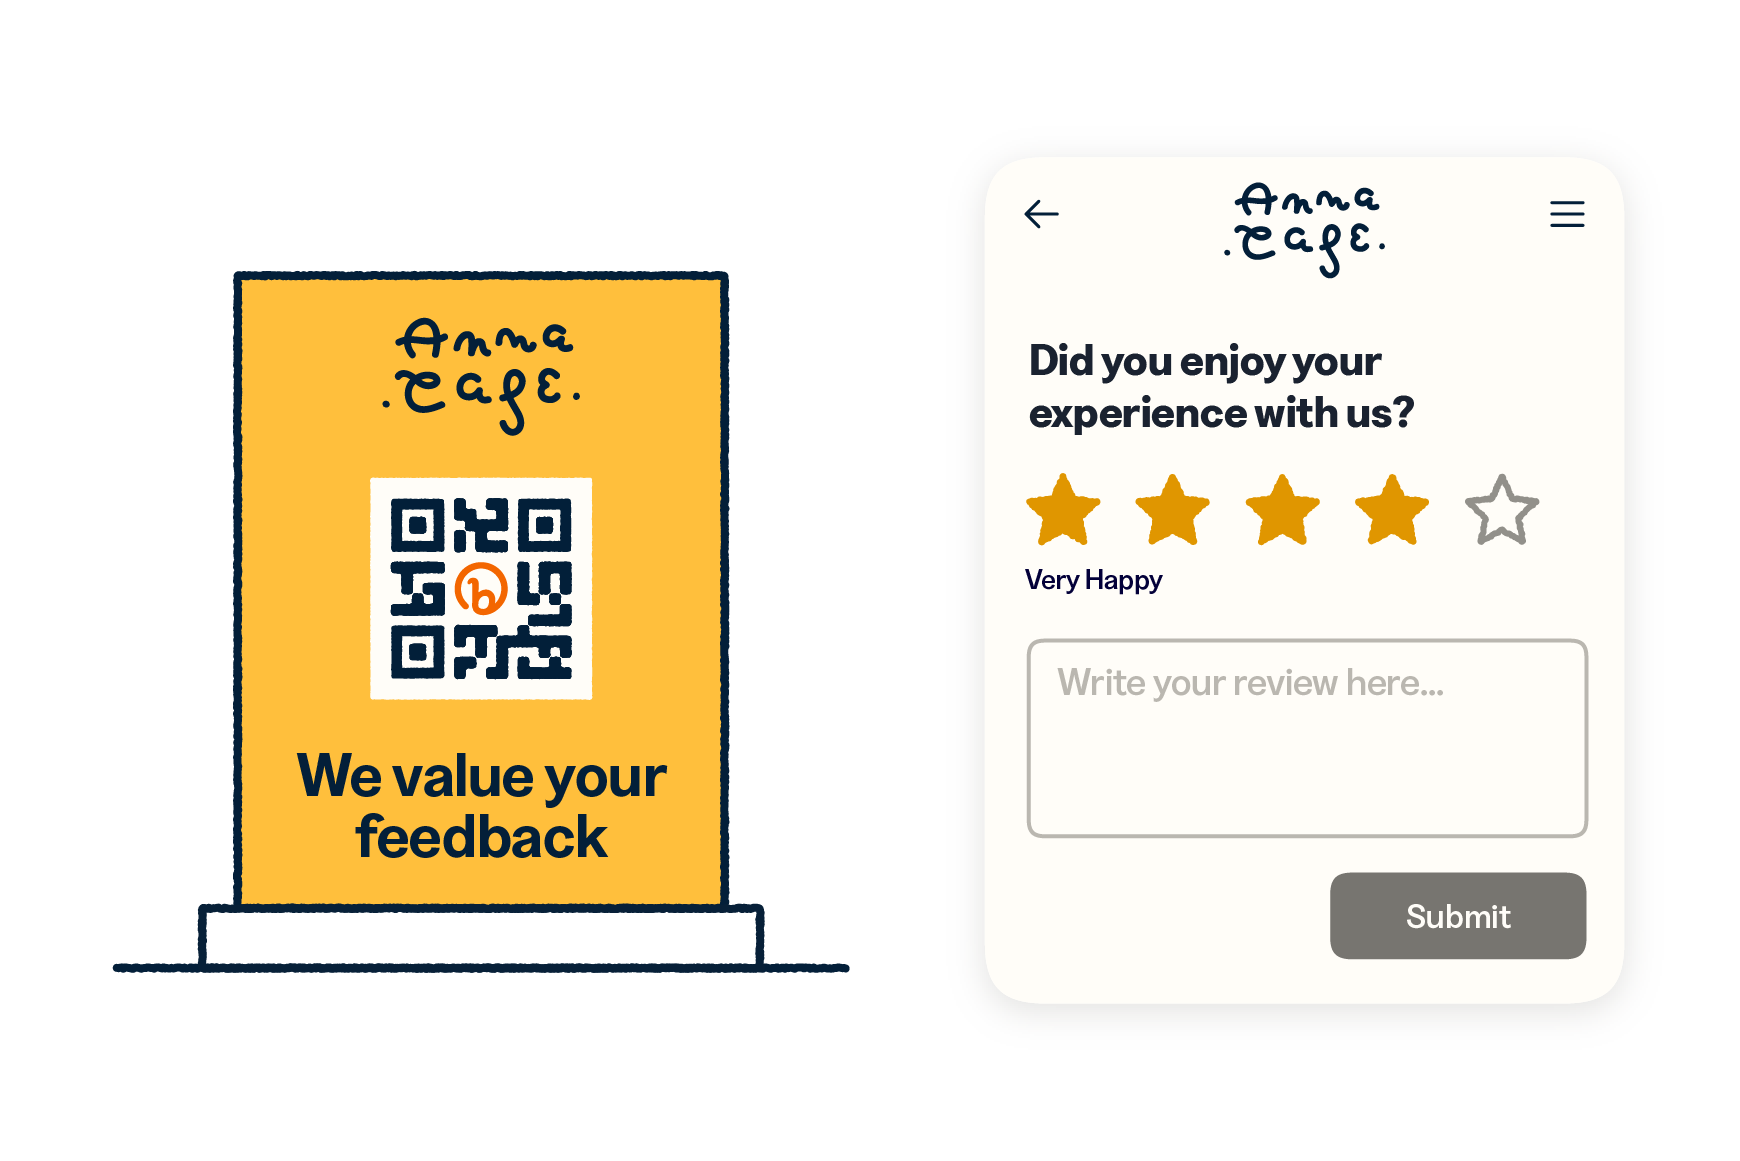 QR code for customer feedback at Amma Cafe